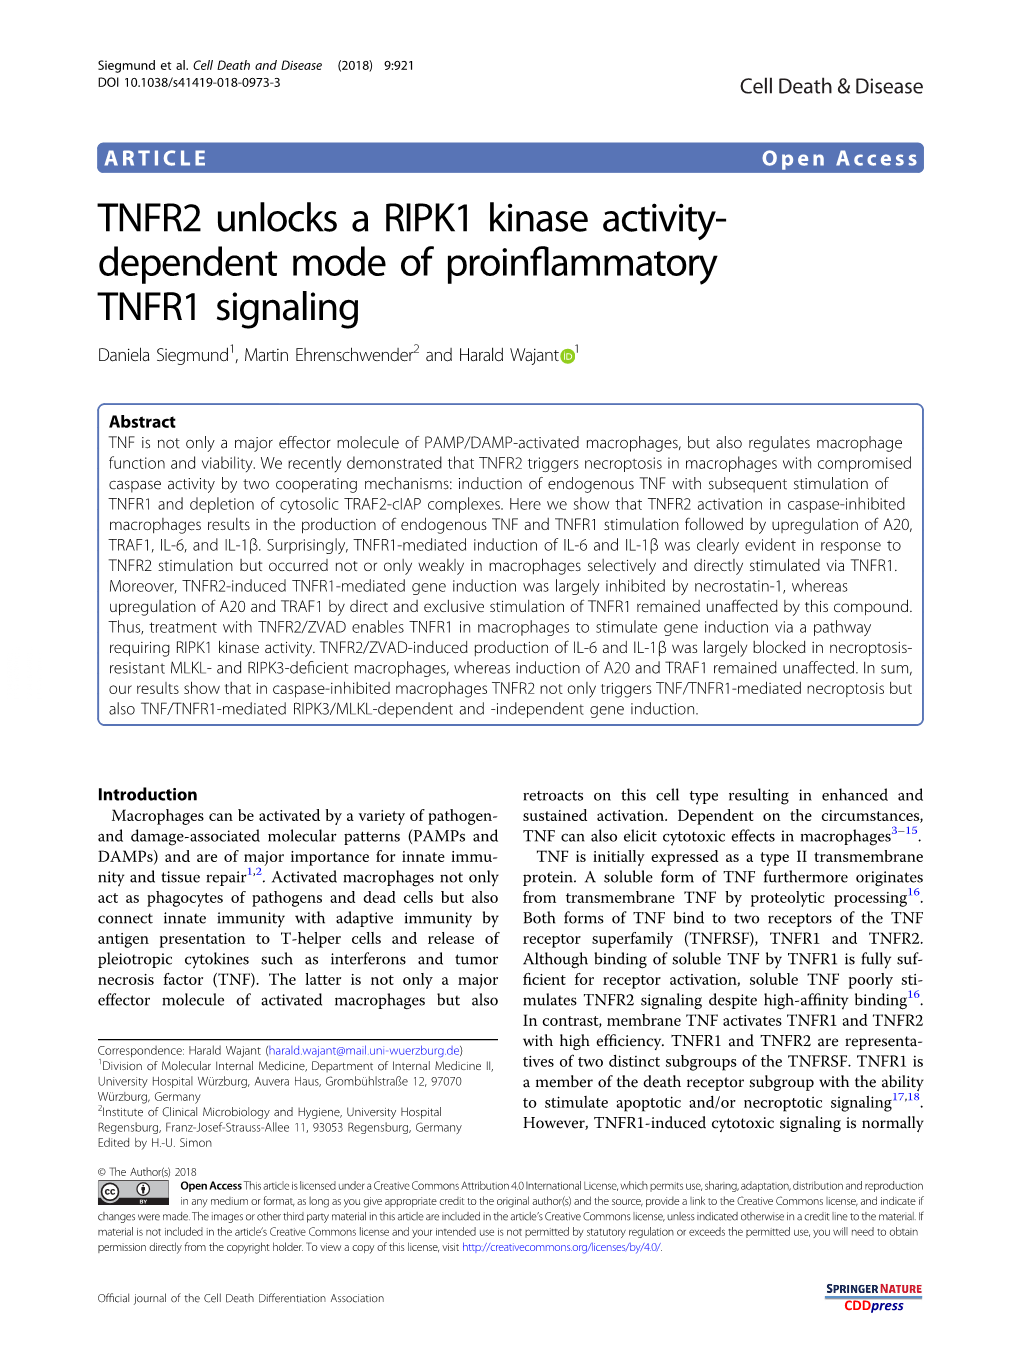 TNFR2 Unlocks a RIPK1 Kinase Activity-Dependent Mode Of